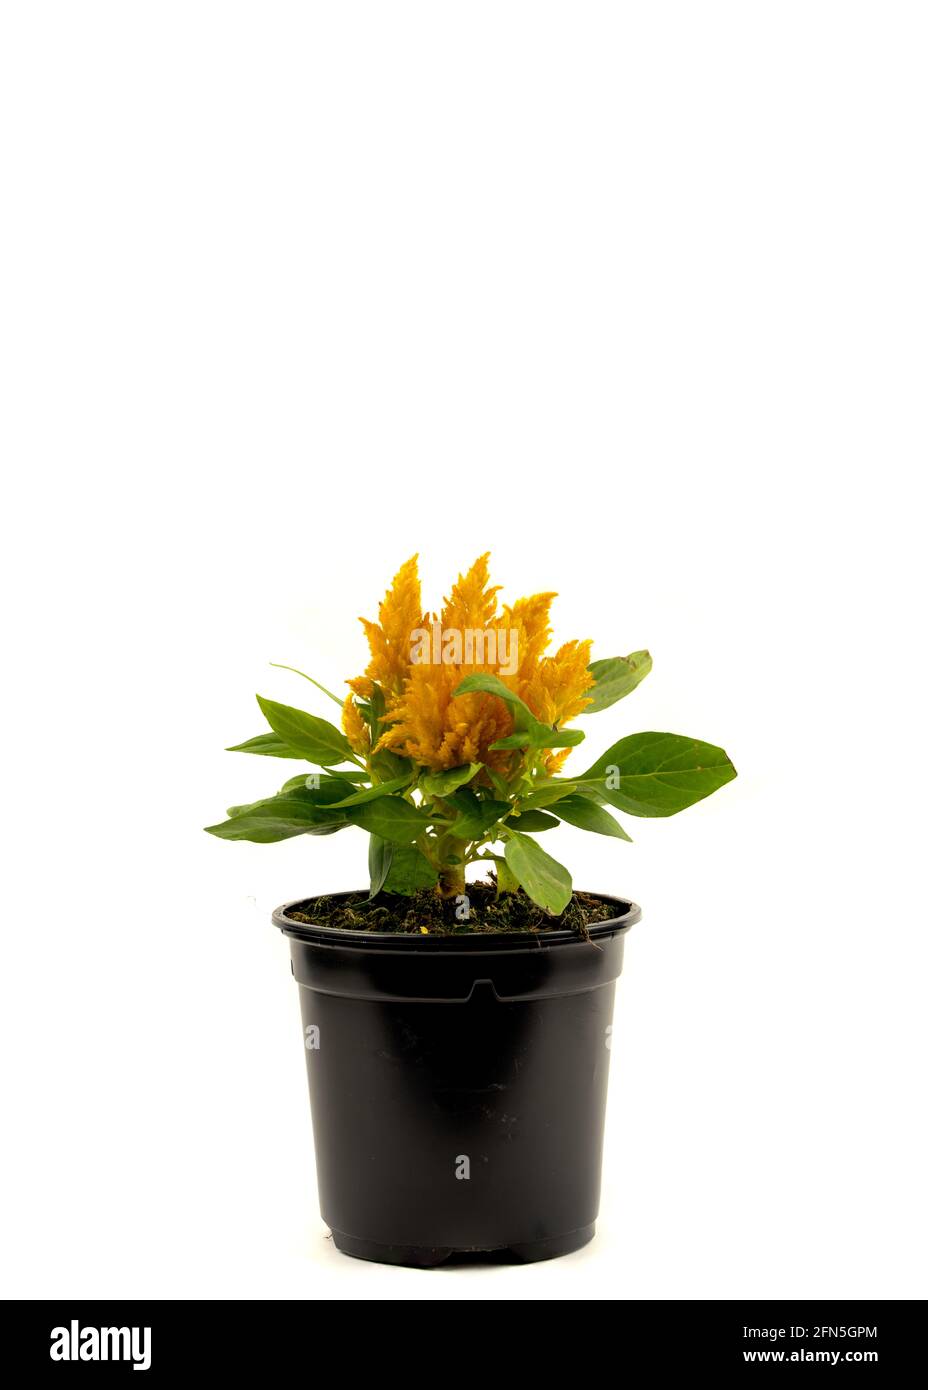 celosia argentea with orange flower in pot with white background Stock  Photo - Alamy